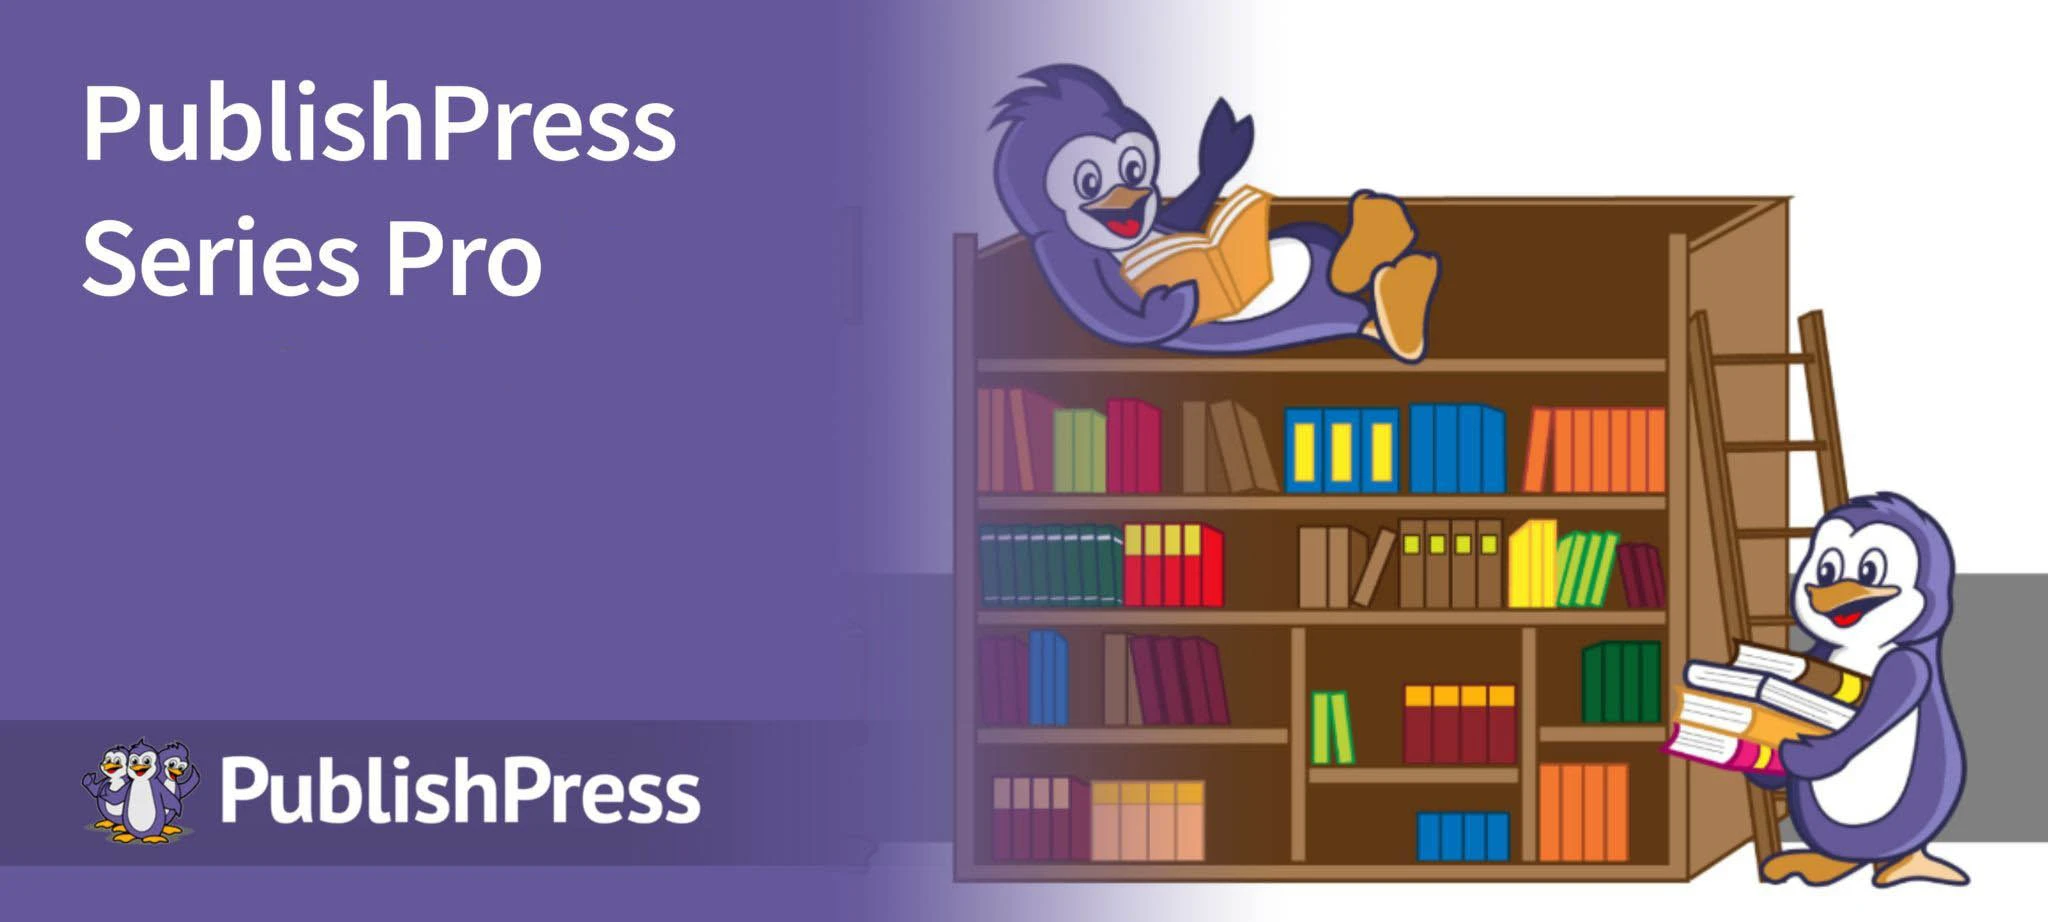 Download the PublishPress Series Pro plugin for WordPress